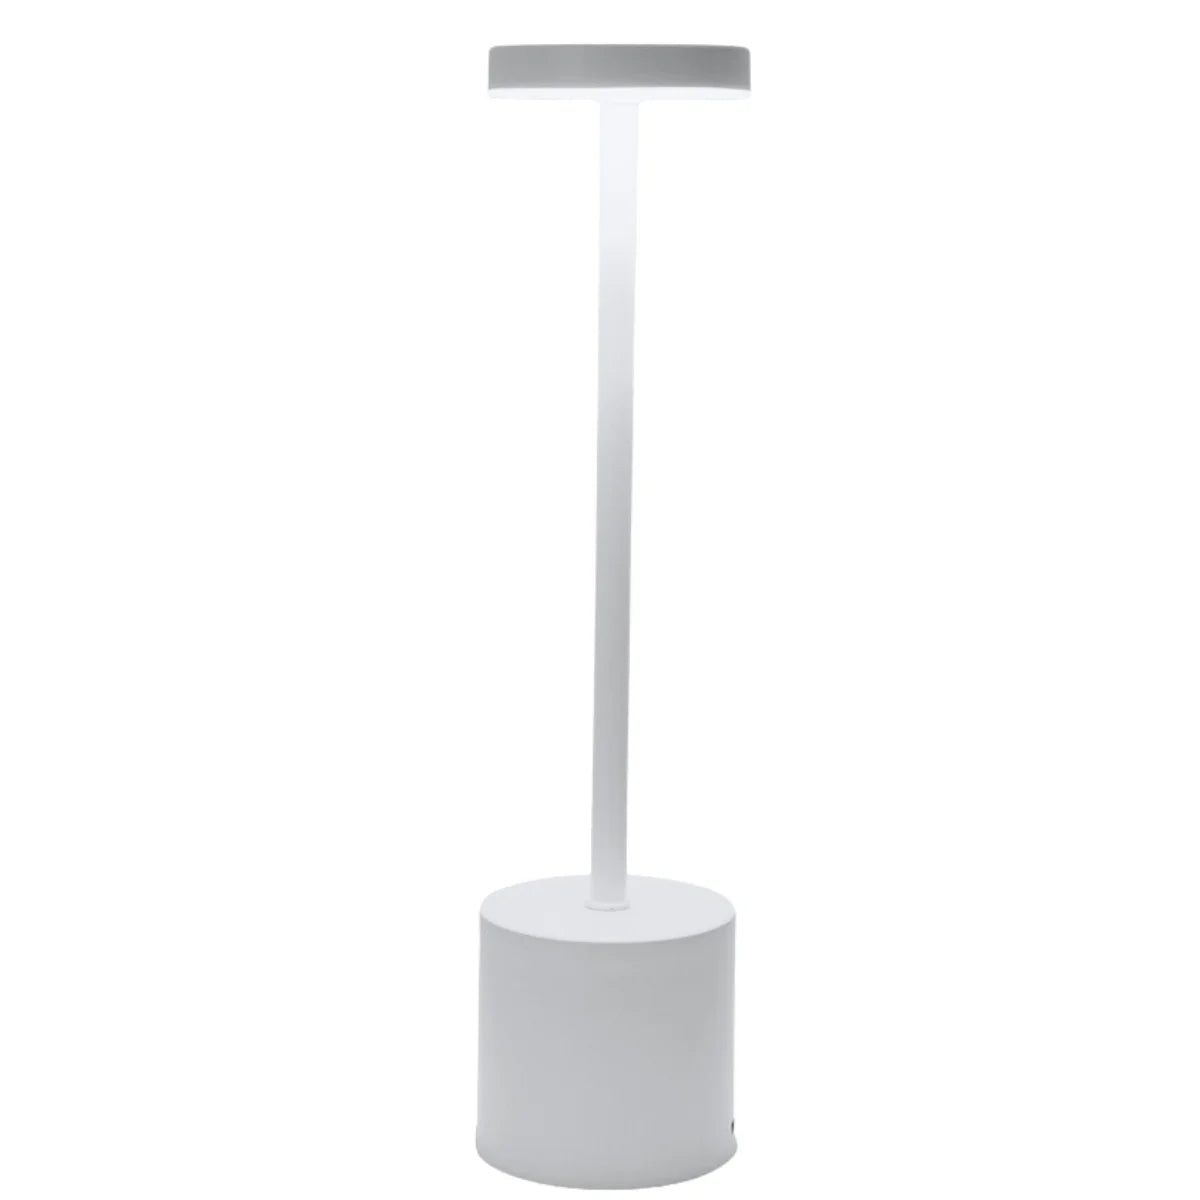 Wireless LED Desk Lamp - Handy, Adaptable, Cable-Free Illumination Rekea Furnitures